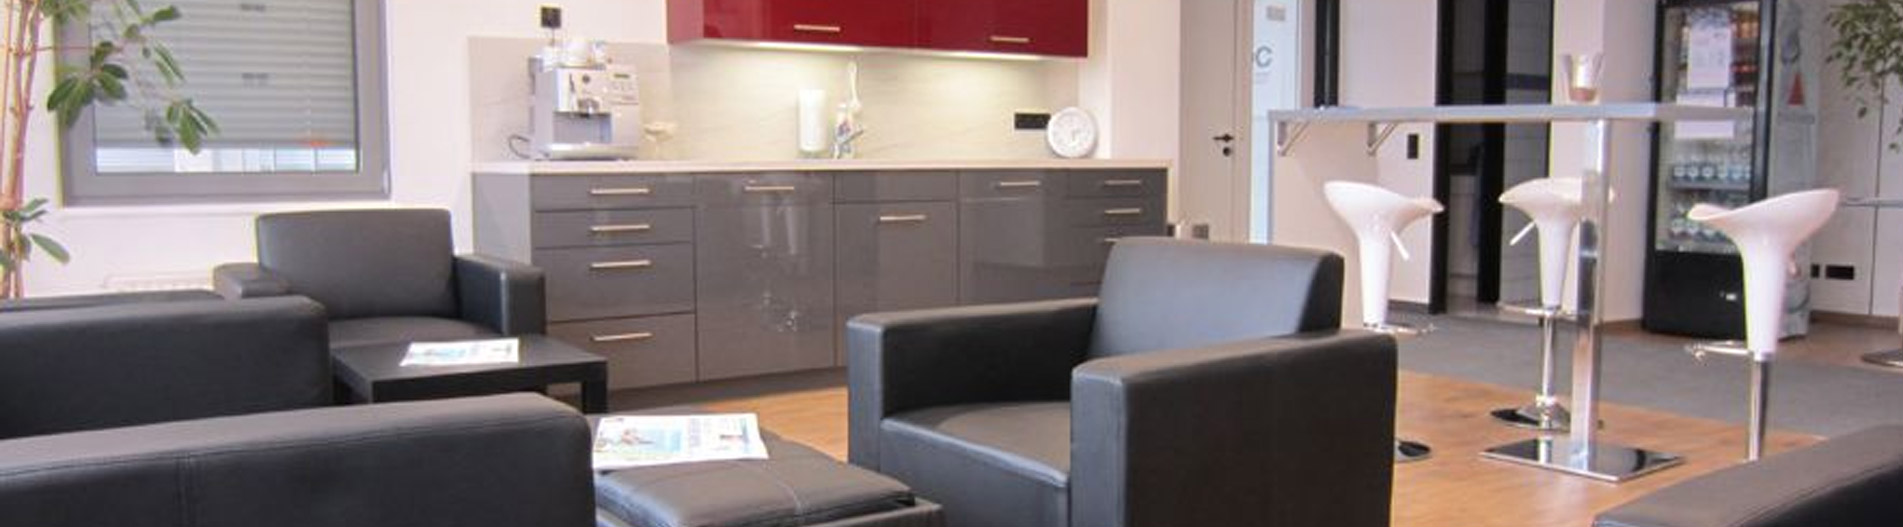 Rent your office space near Stuttgart Airport